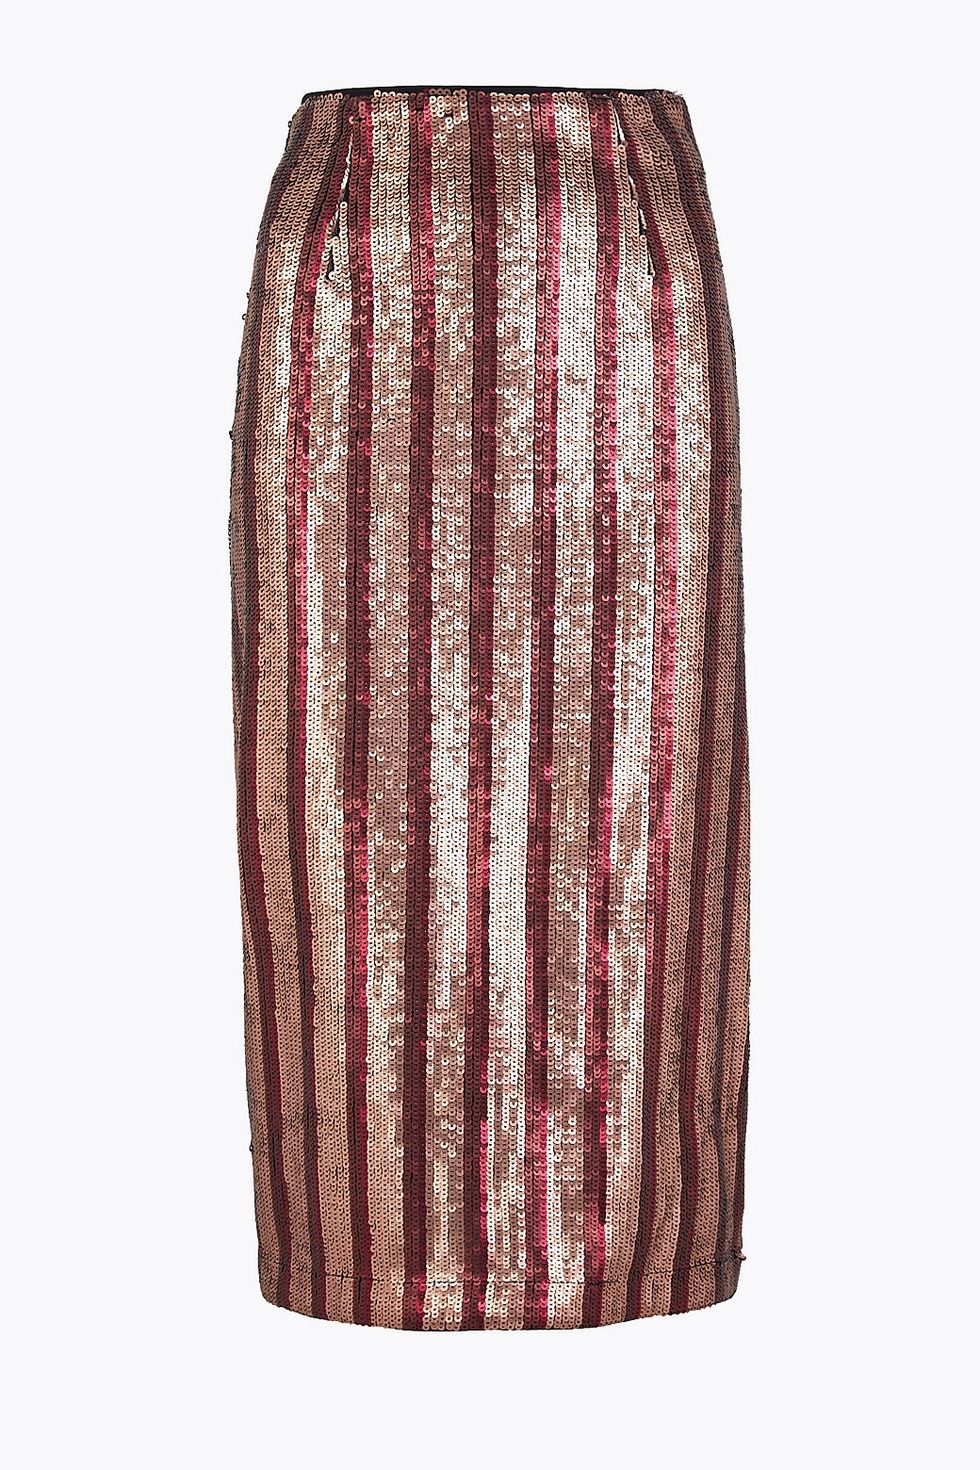 Autograph Sequin Striped Pencil Skirt